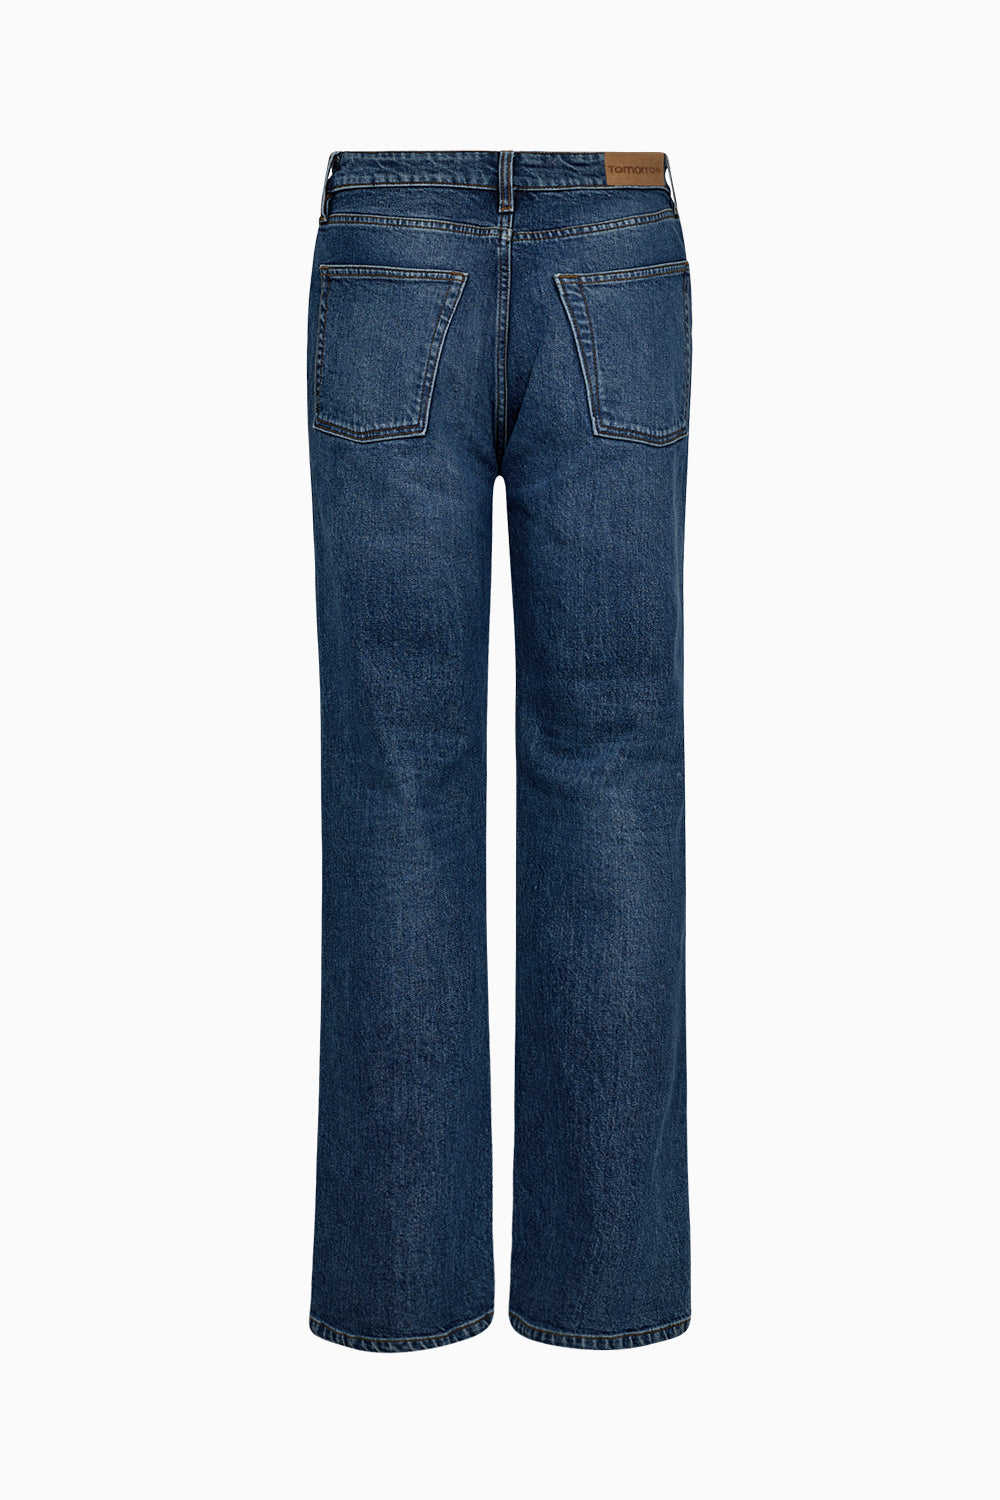 Tomorrow TRW-Brown Jeans Wash Woodland Jeans & Pants 51 Denim Blue